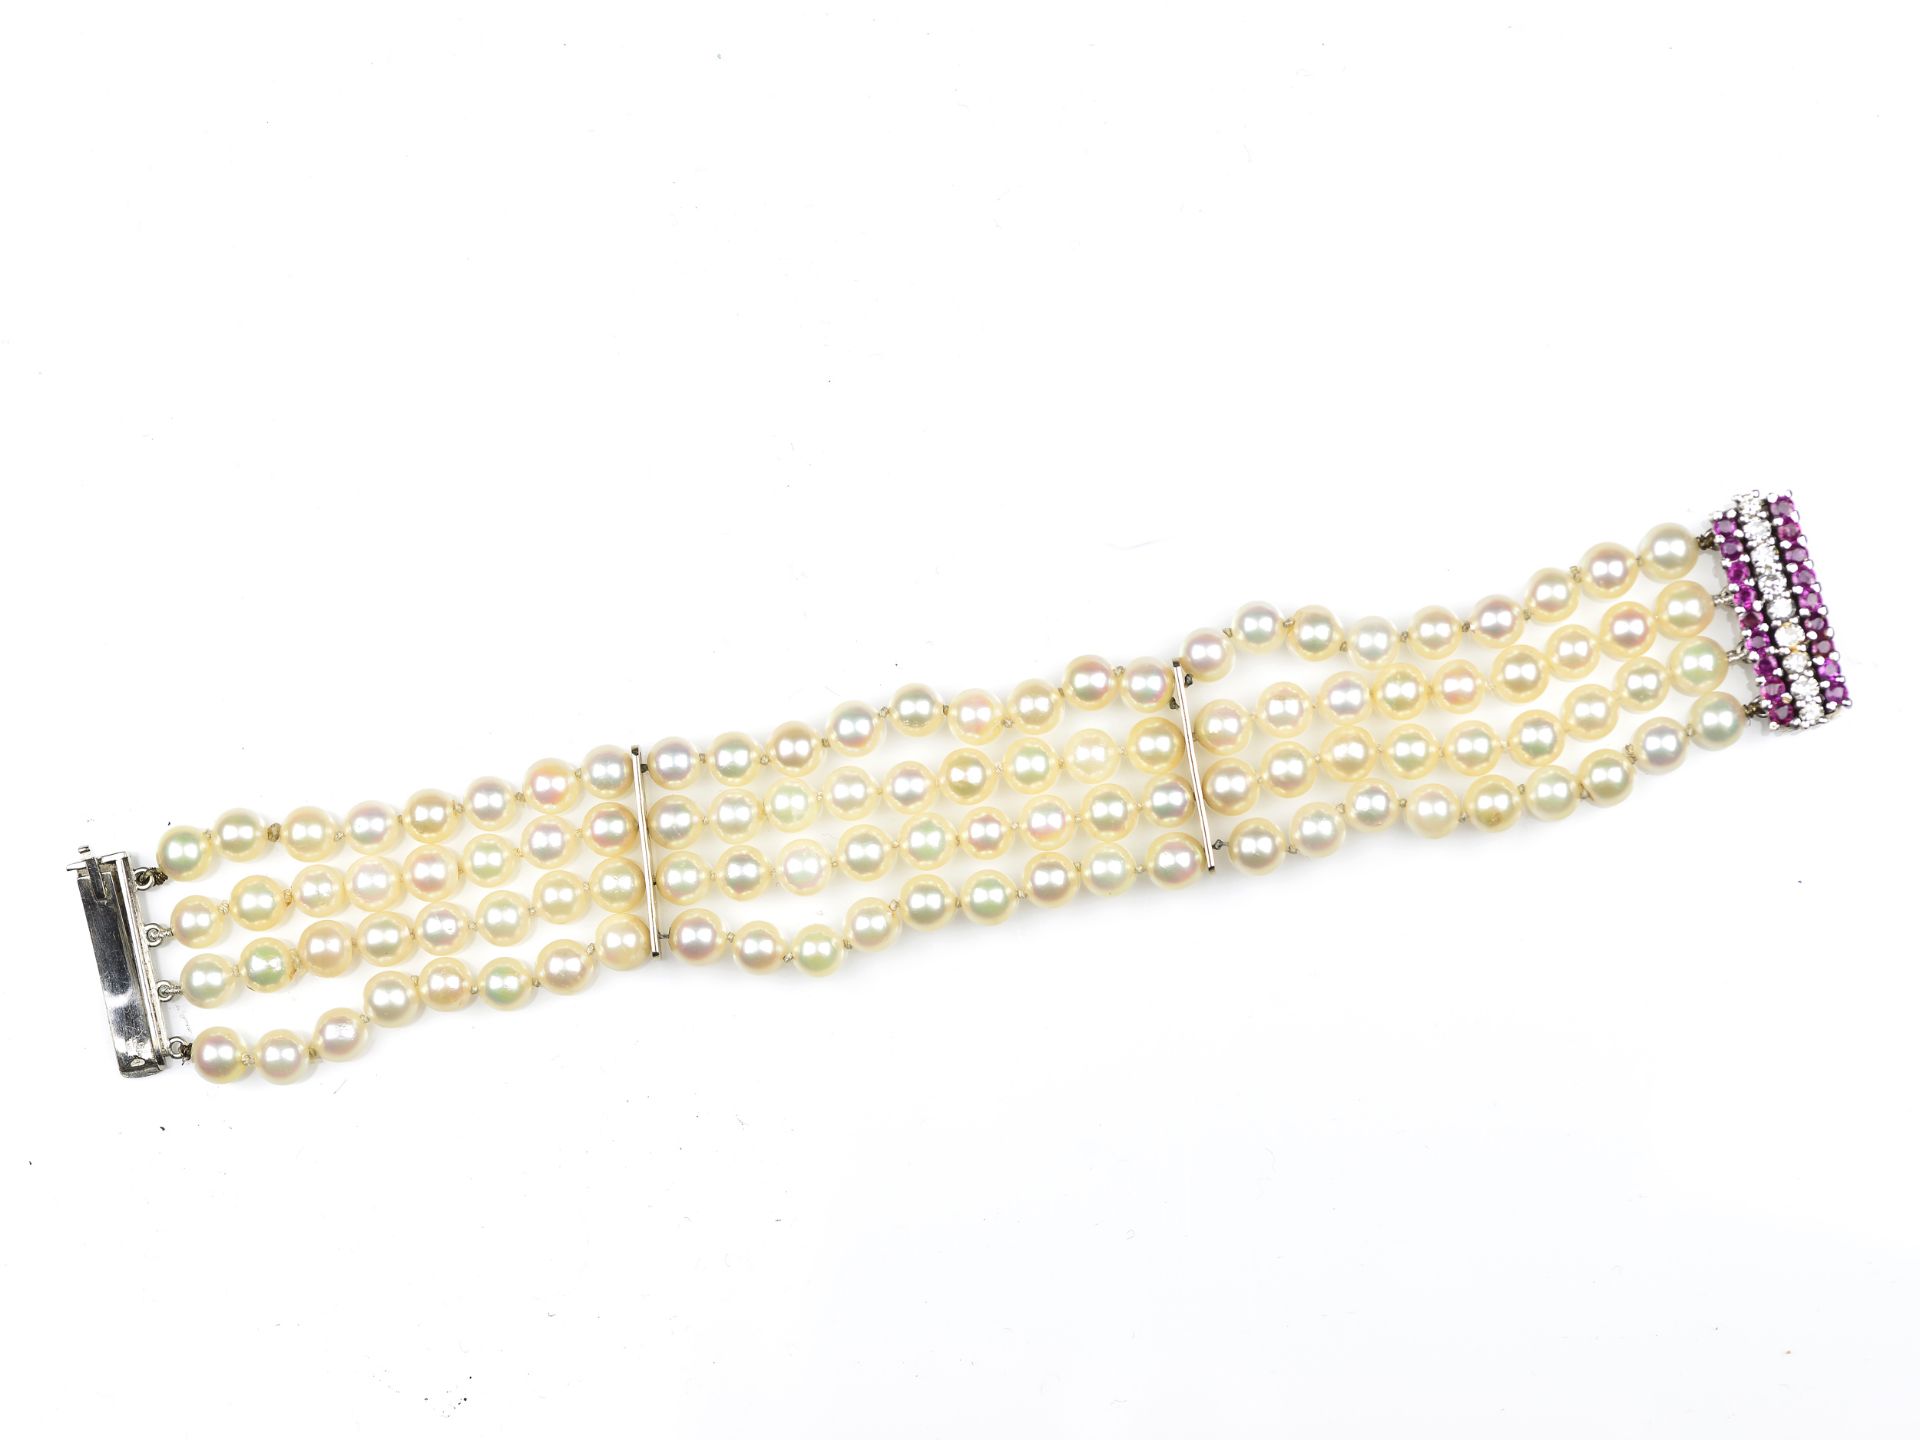 Four-row pearl bracelet - Image 2 of 2